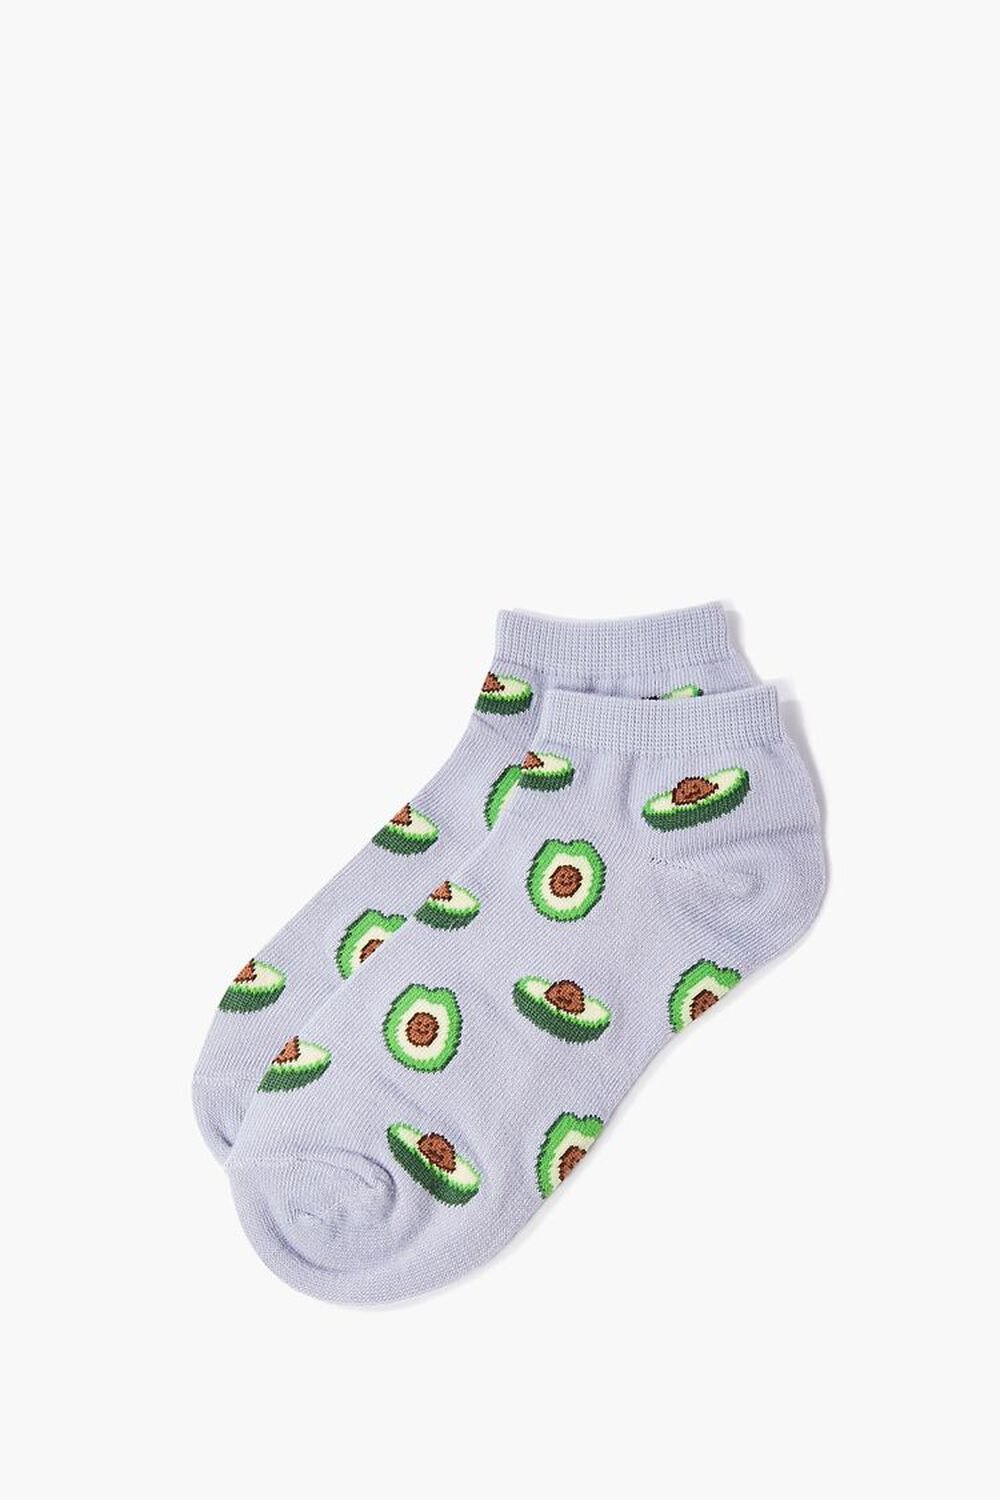 BLUE/MULTI Avocado Print Ankle Socks, image 1